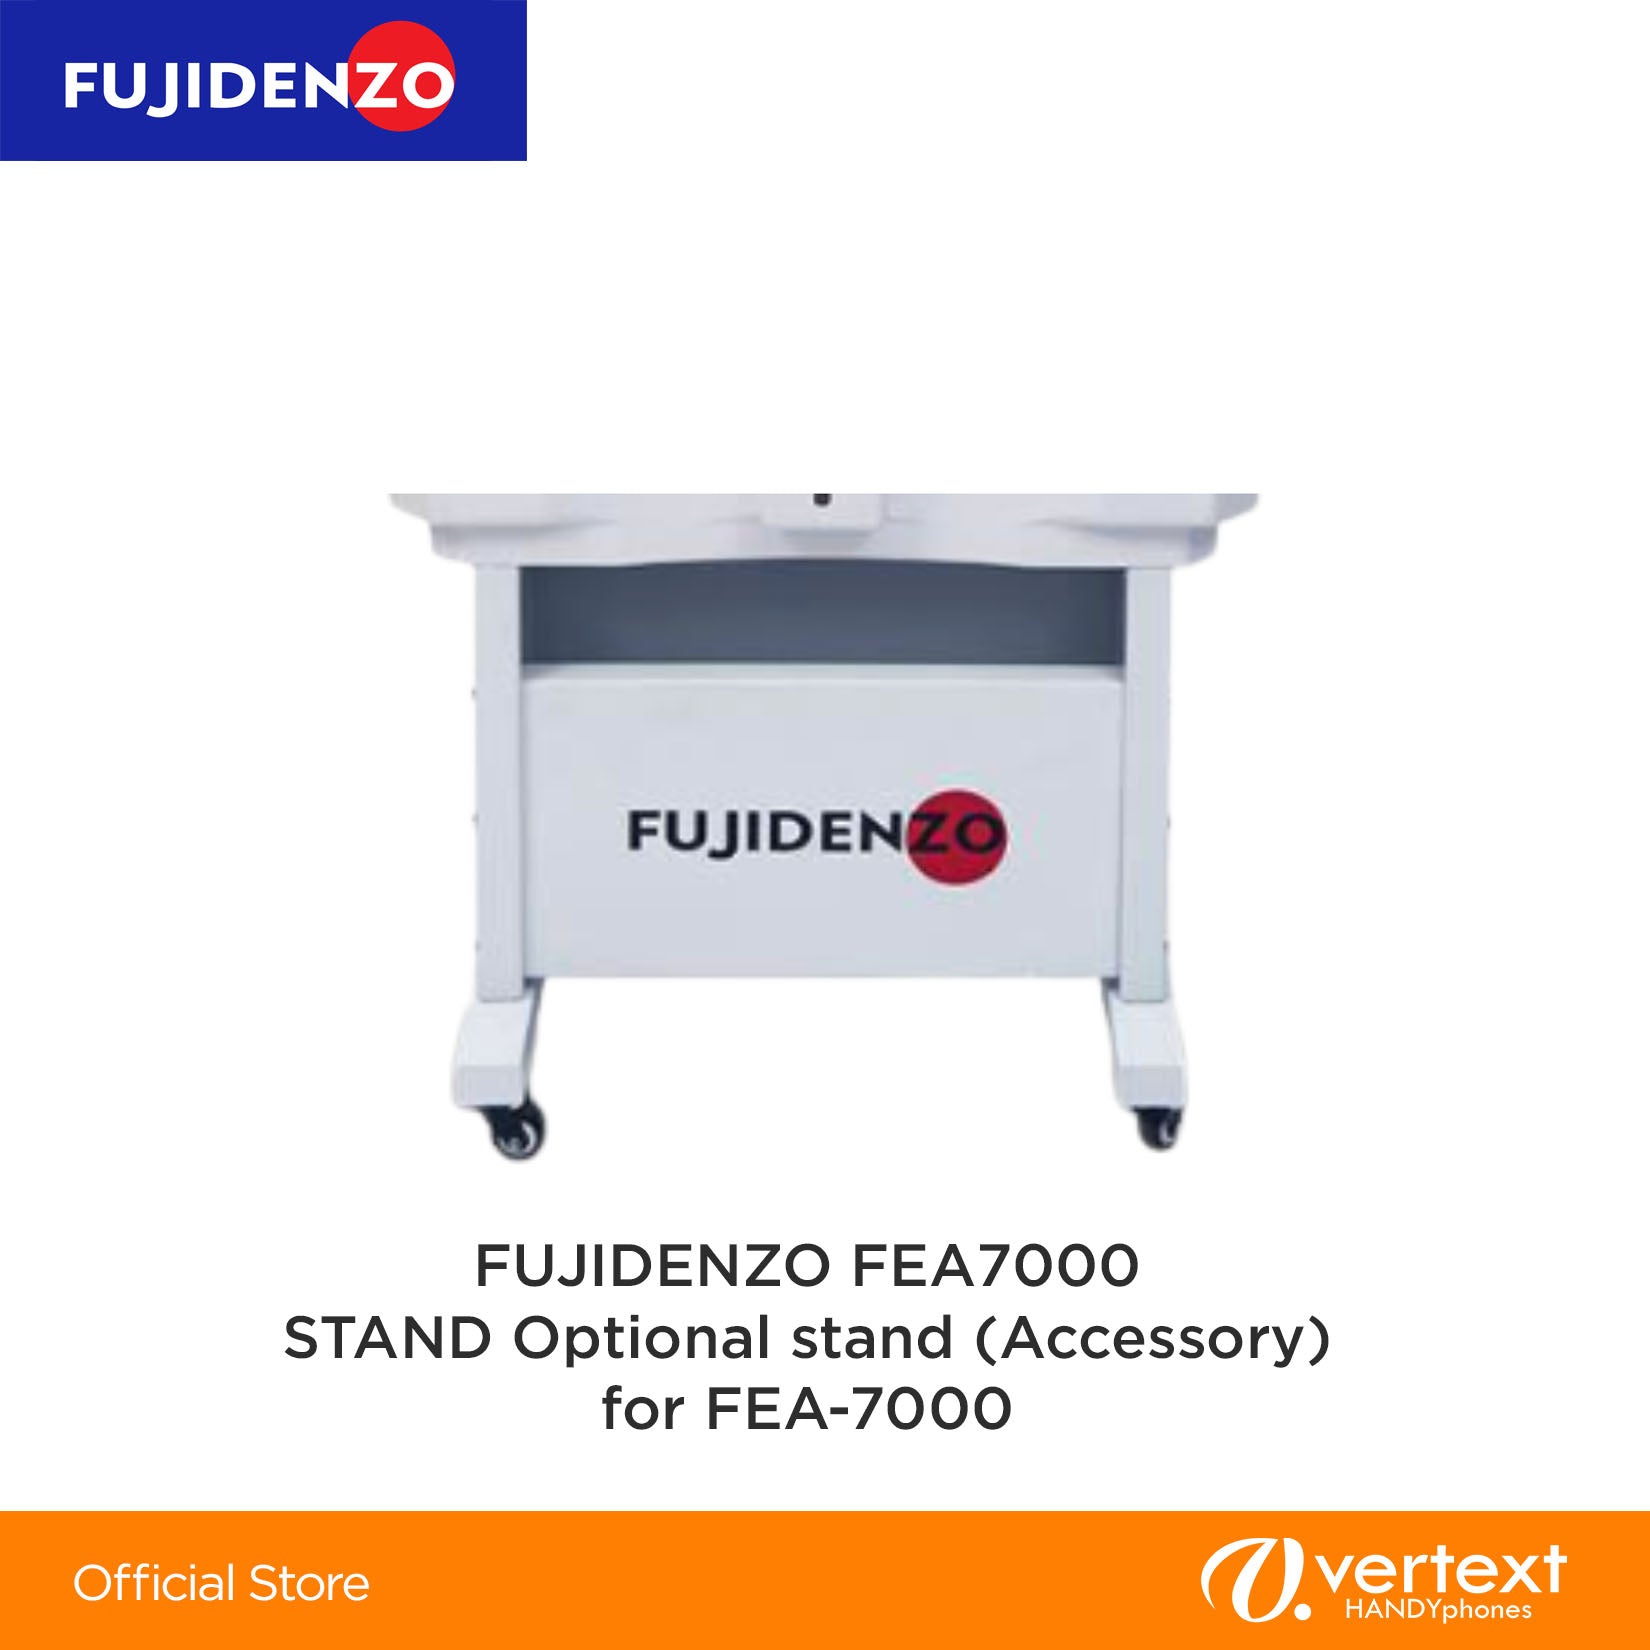 Fujidenzo FEA7000 Stand